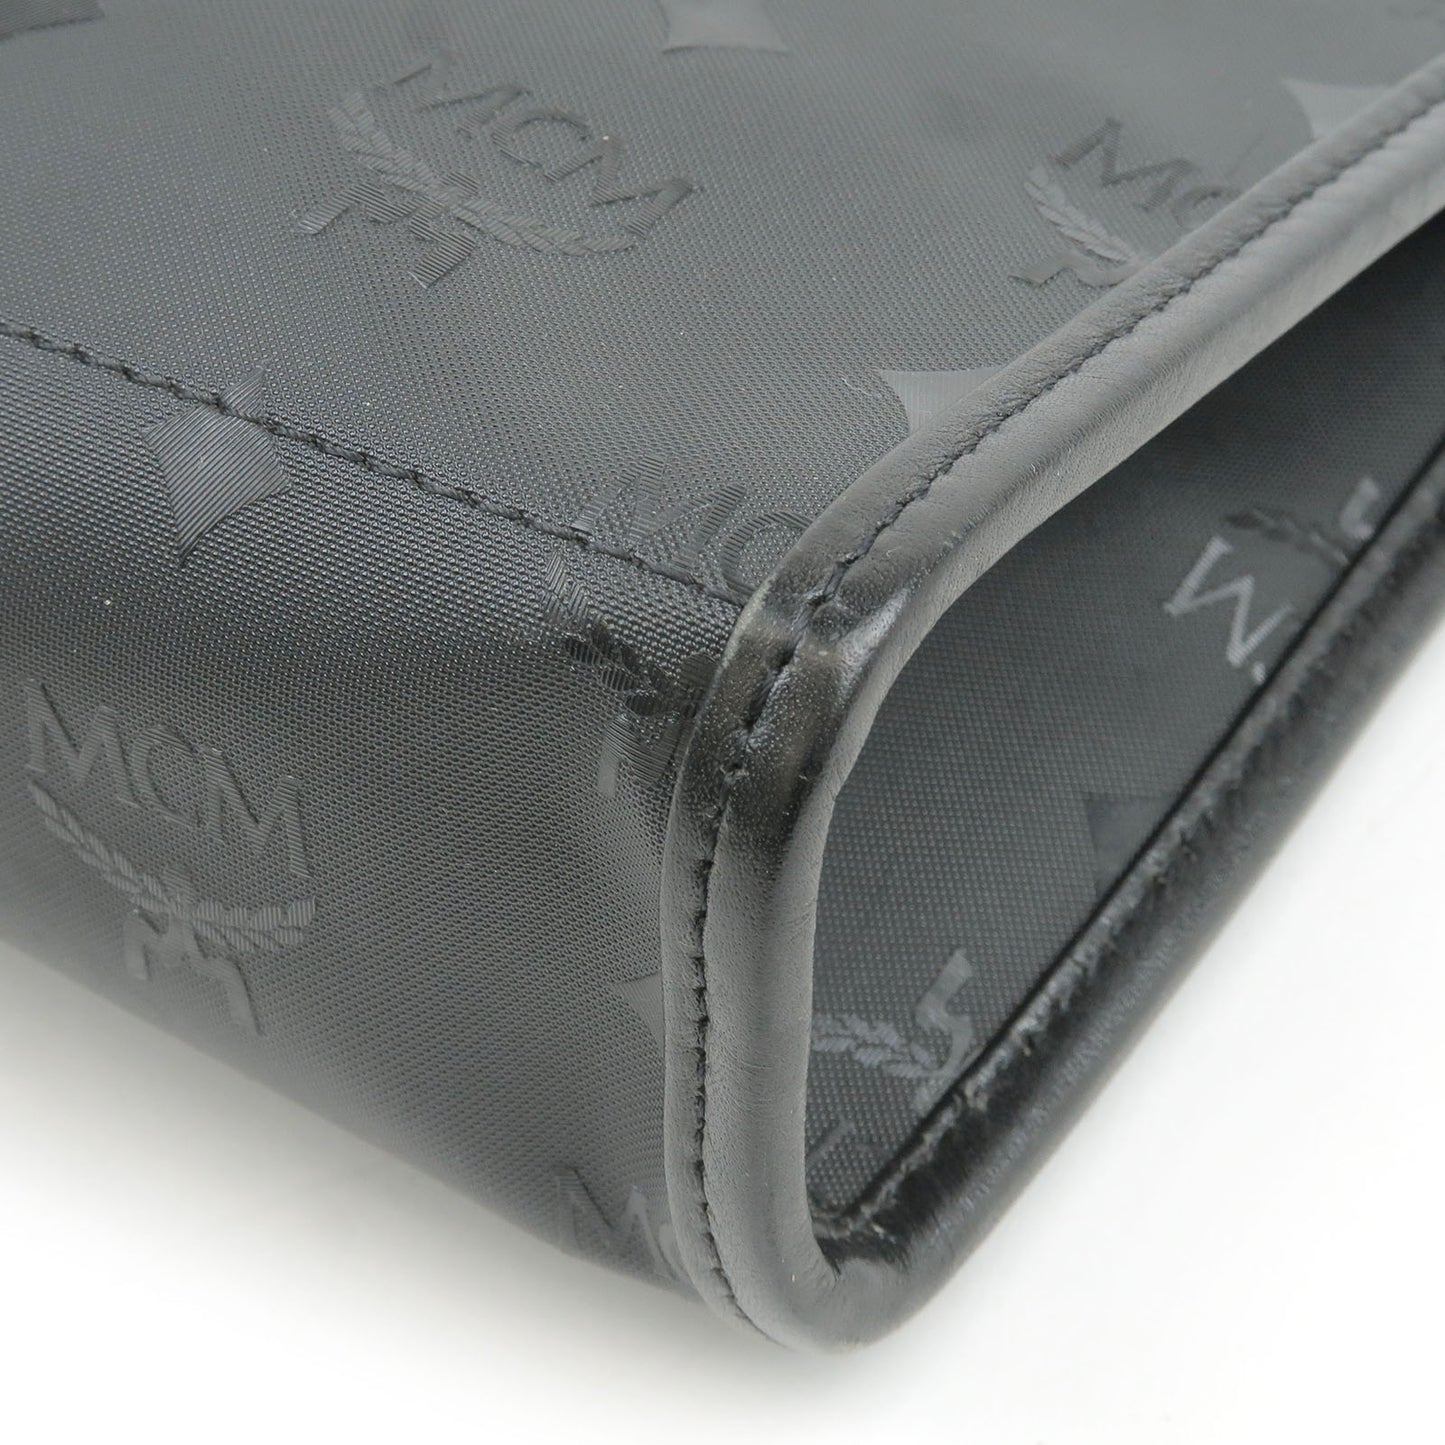 MCM Logogram PVC Leather Clutch Bag Pouch Black